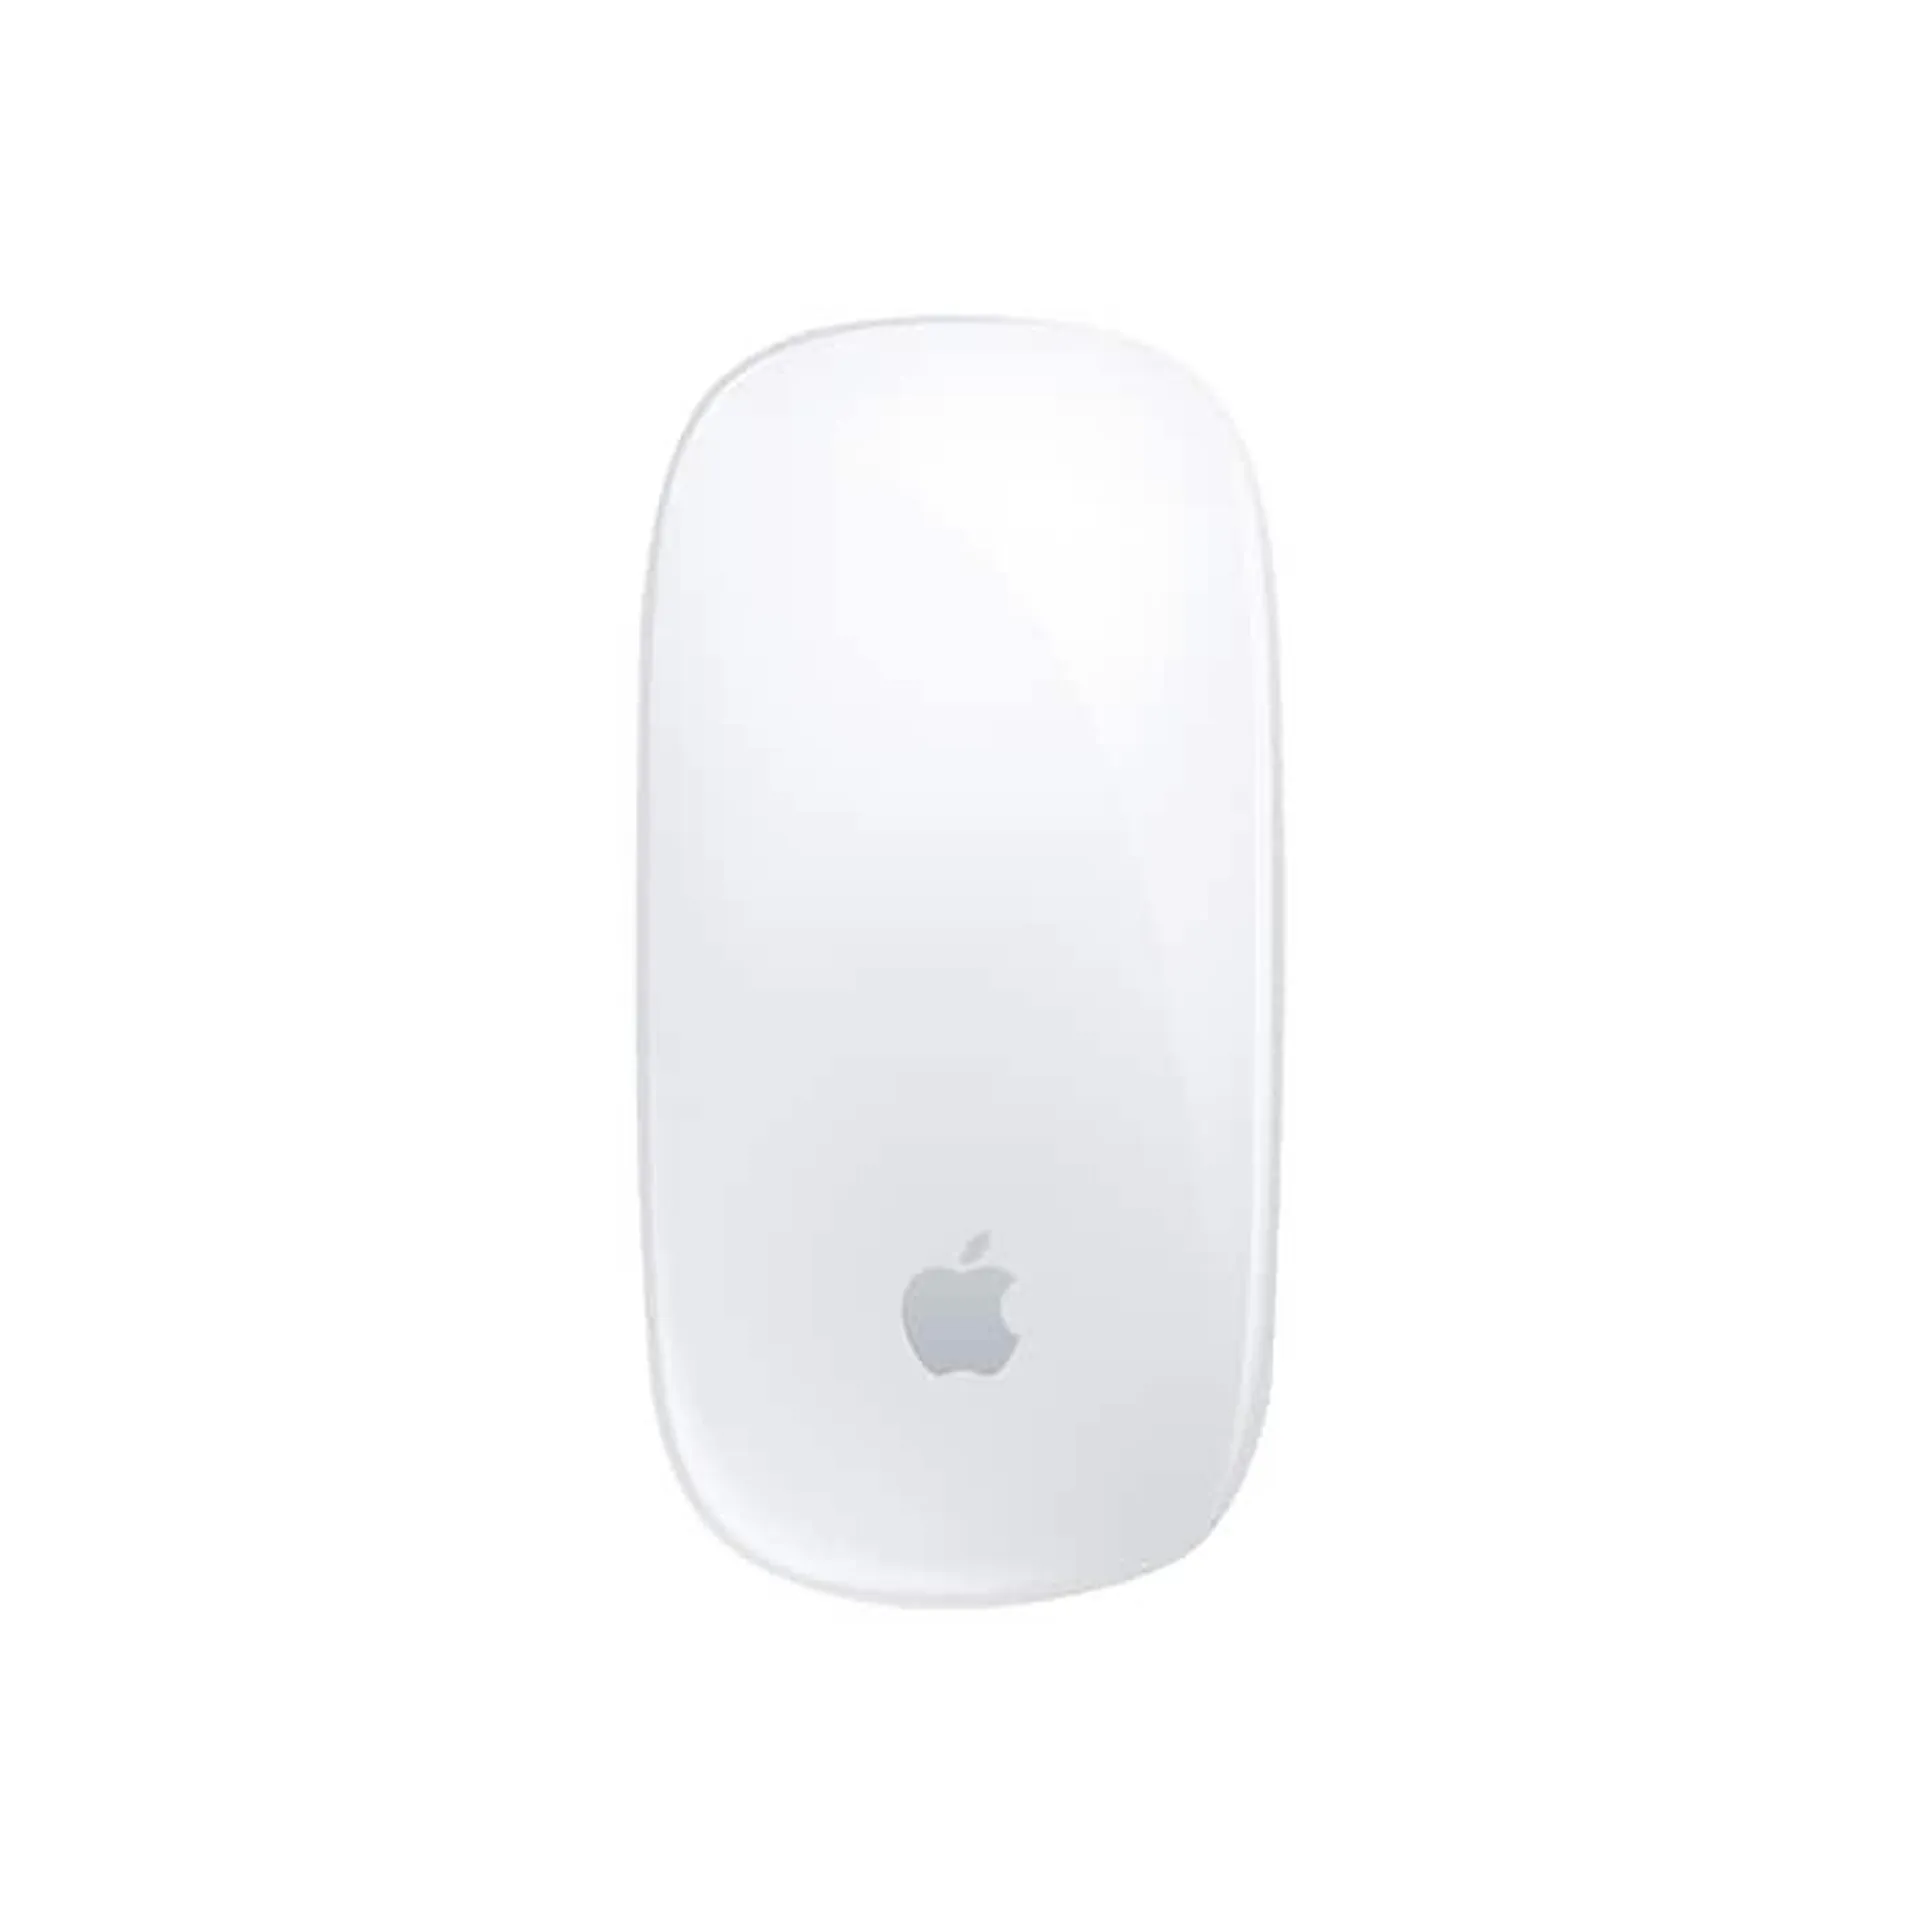 Apple Magic Wireless Bluetooth Mouse,